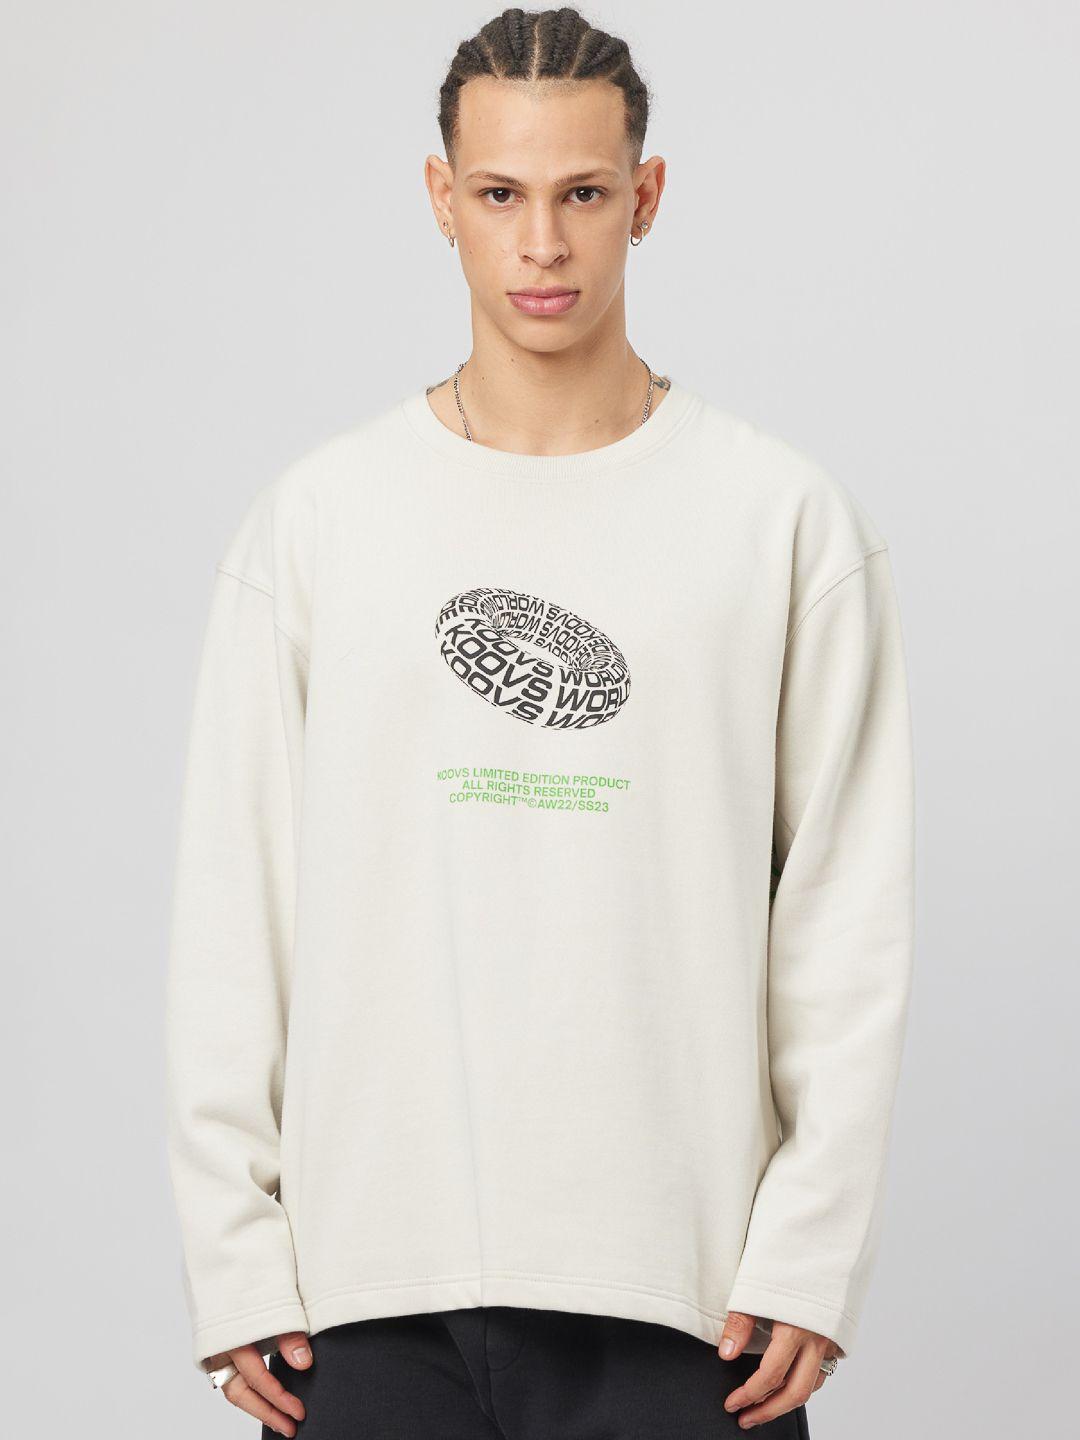 koovs disc graphic printed pure cotton pullover sweatshirt